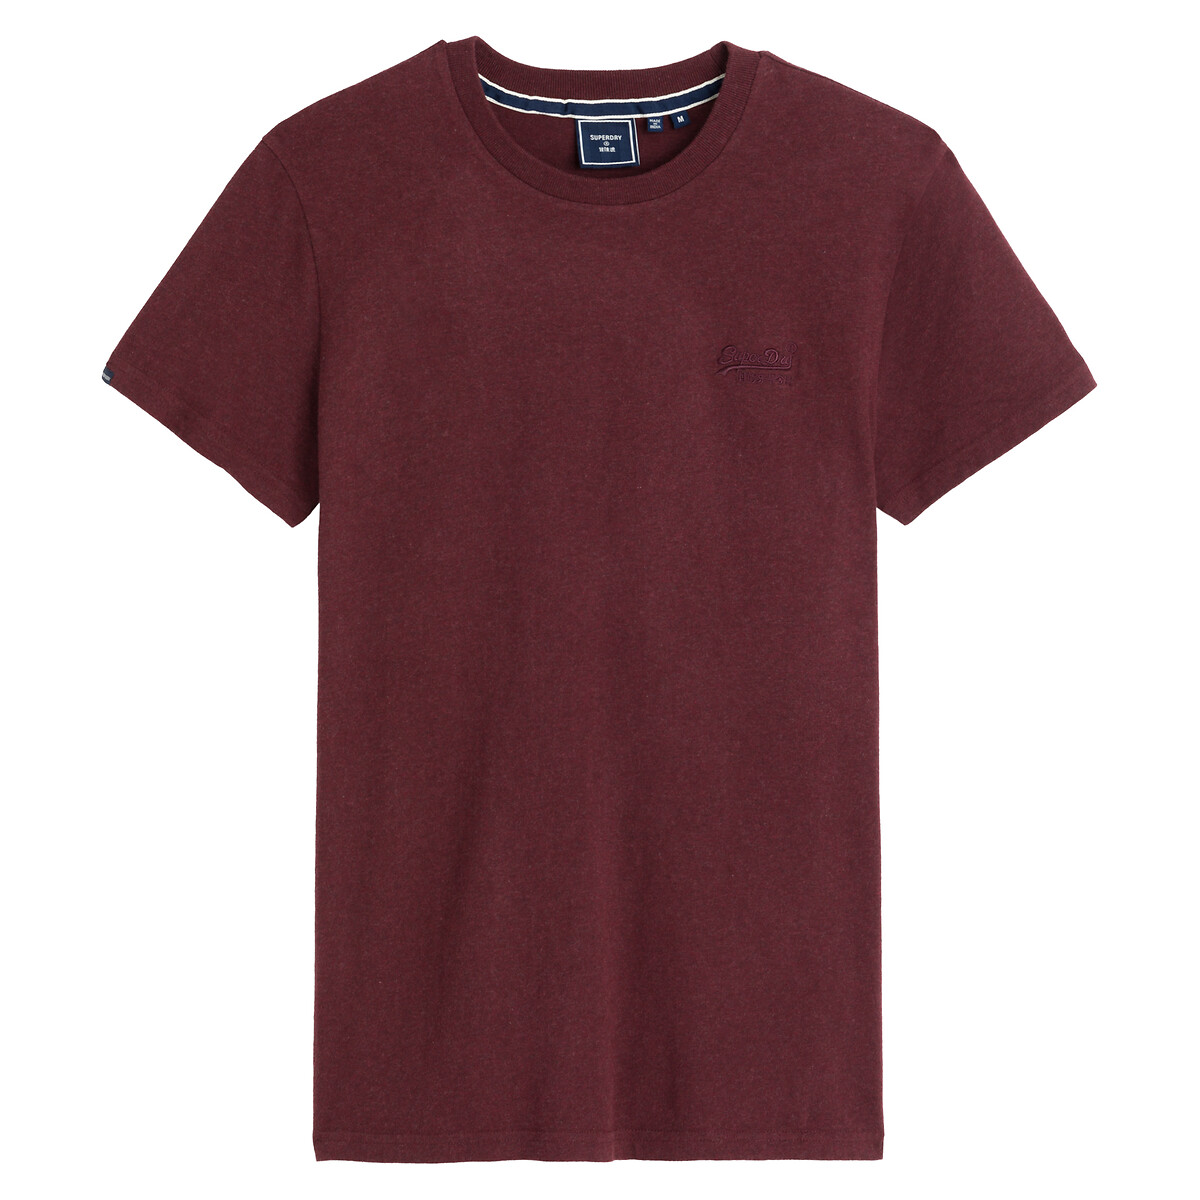 La | T-shirt Redoute runder logo, ausschnitt vintage Superdry